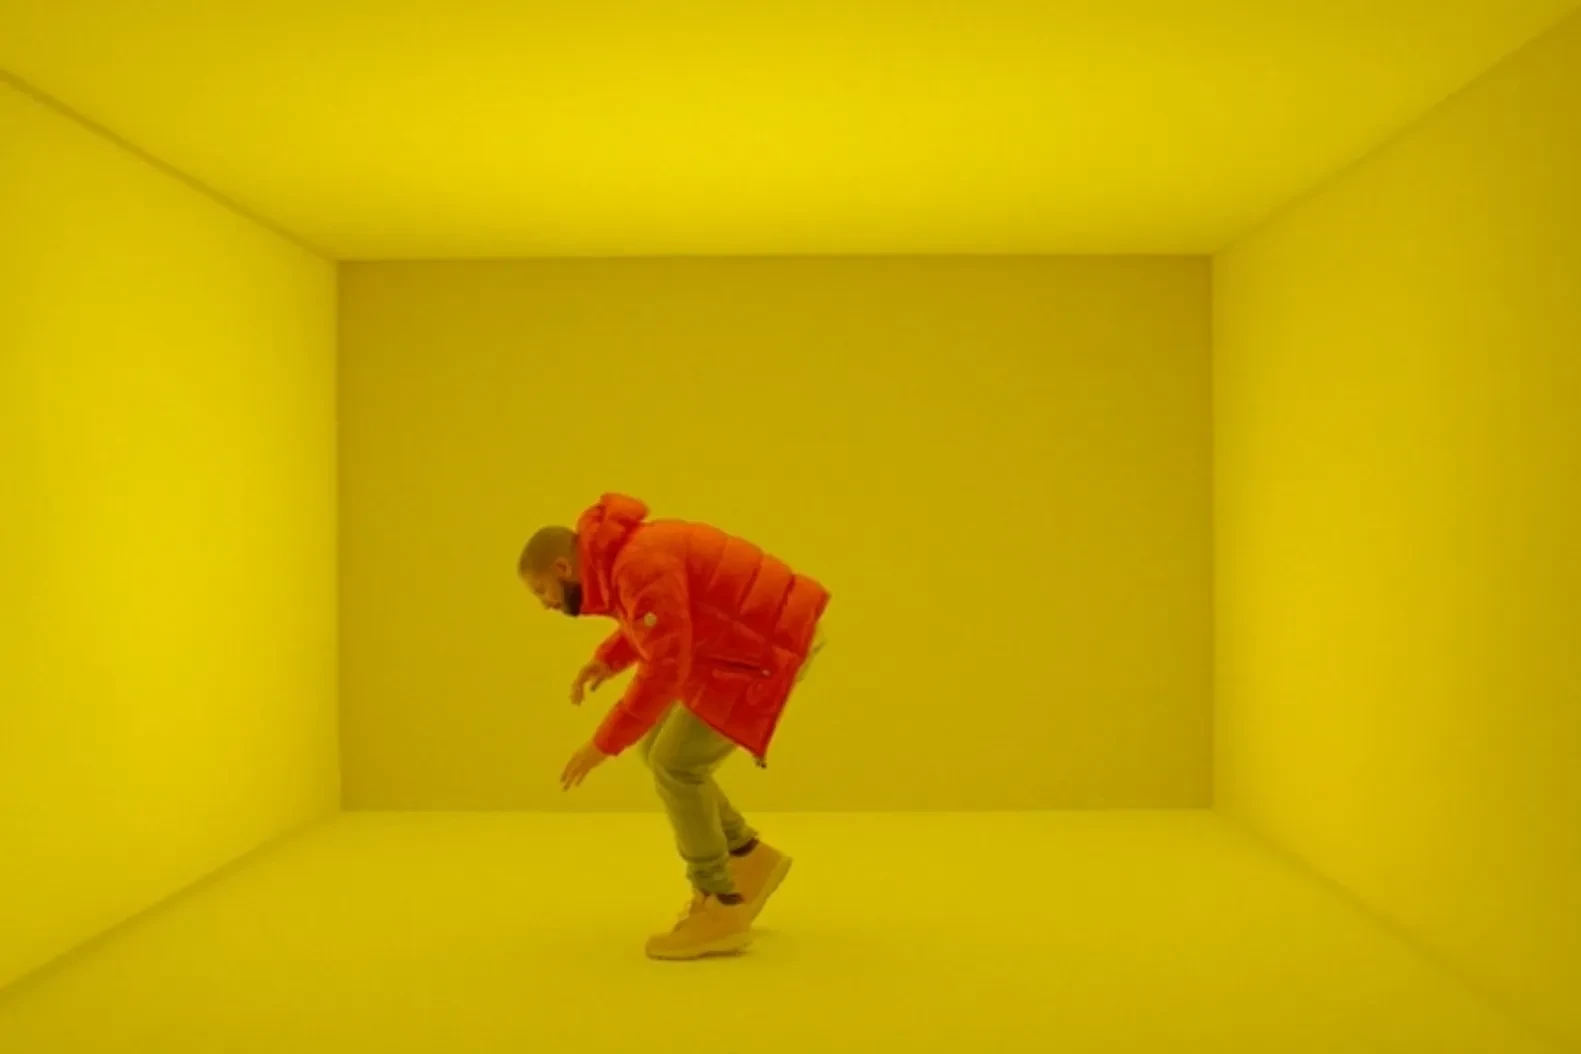 Drake in his music video for Hotline Bling